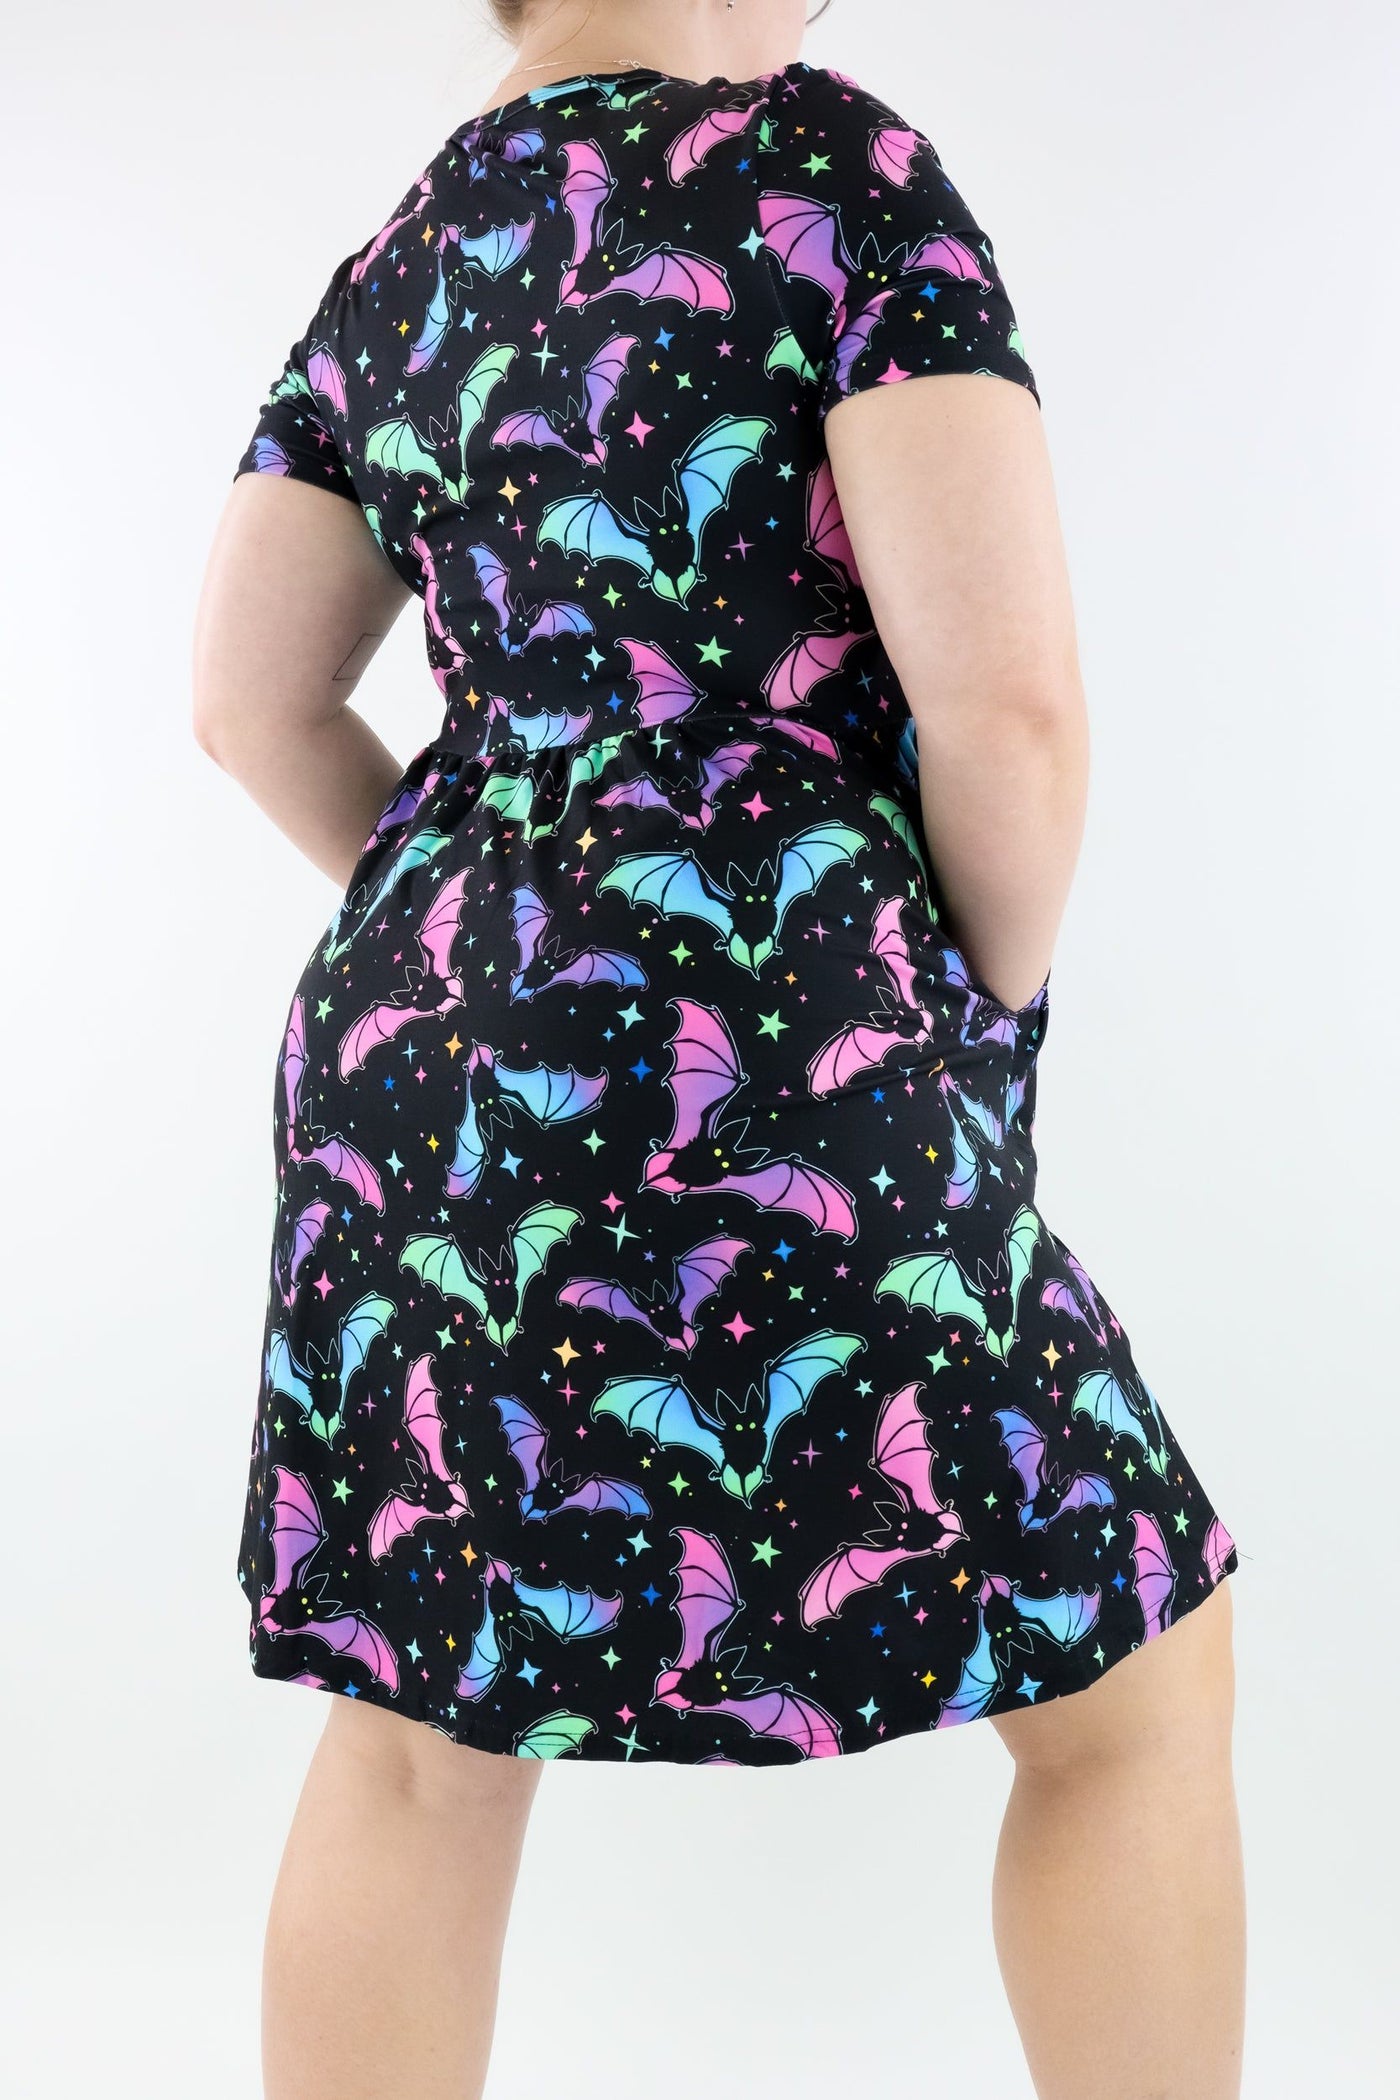 Neon Bats - Short Sleeve Skater Dress - Knee Length - Side Pockets Knee Length Skater Dress Pawlie   